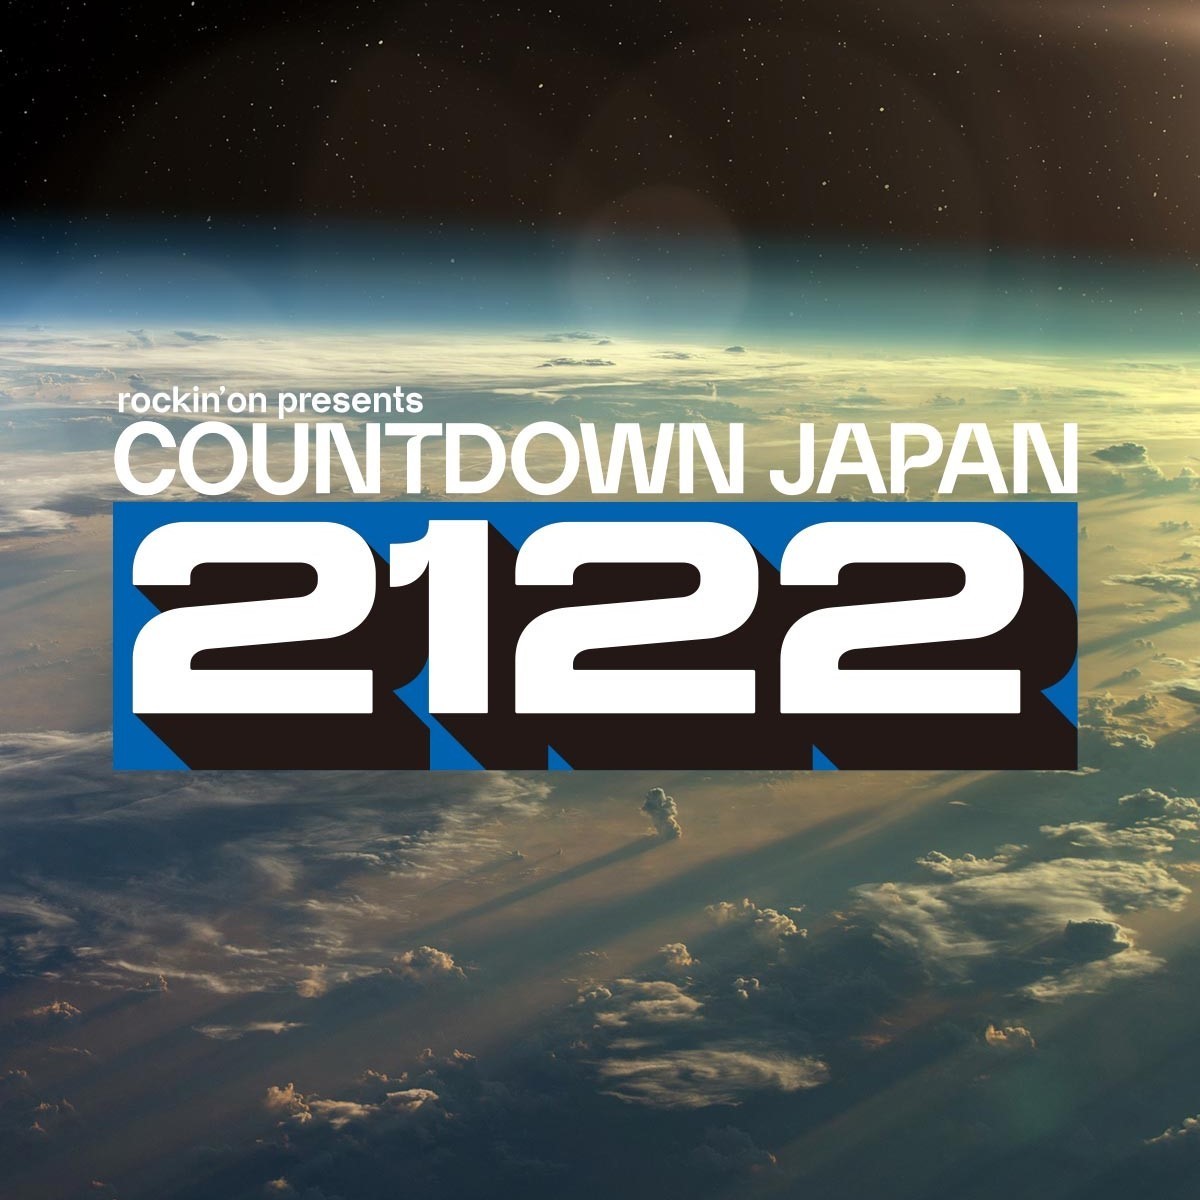 Countdown Japan 21 22 第1弾出演アーティストでドロス ナンバガ Keytalk Kana Boon ブルエン ポルカ Super Beaver ゲス極 マカえんら発表